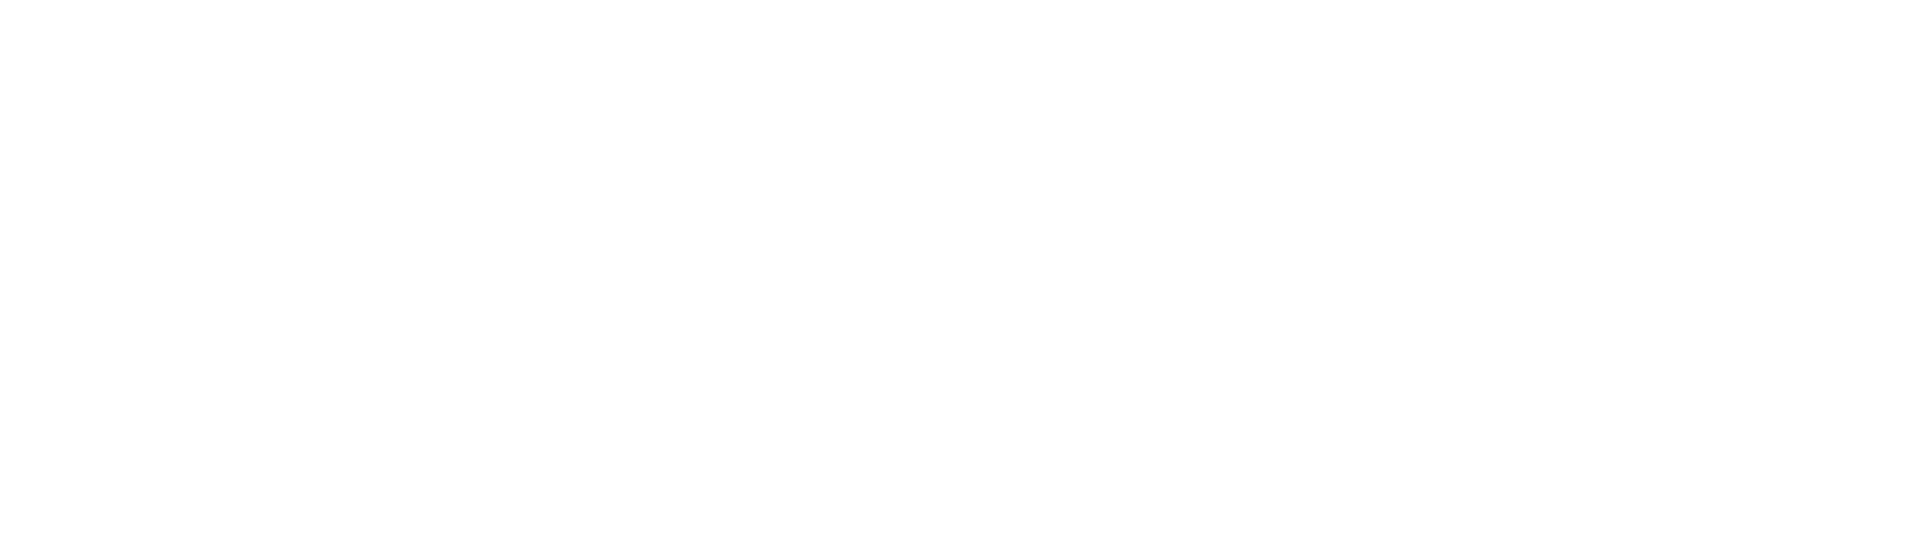 Moms2Tech Inc logo